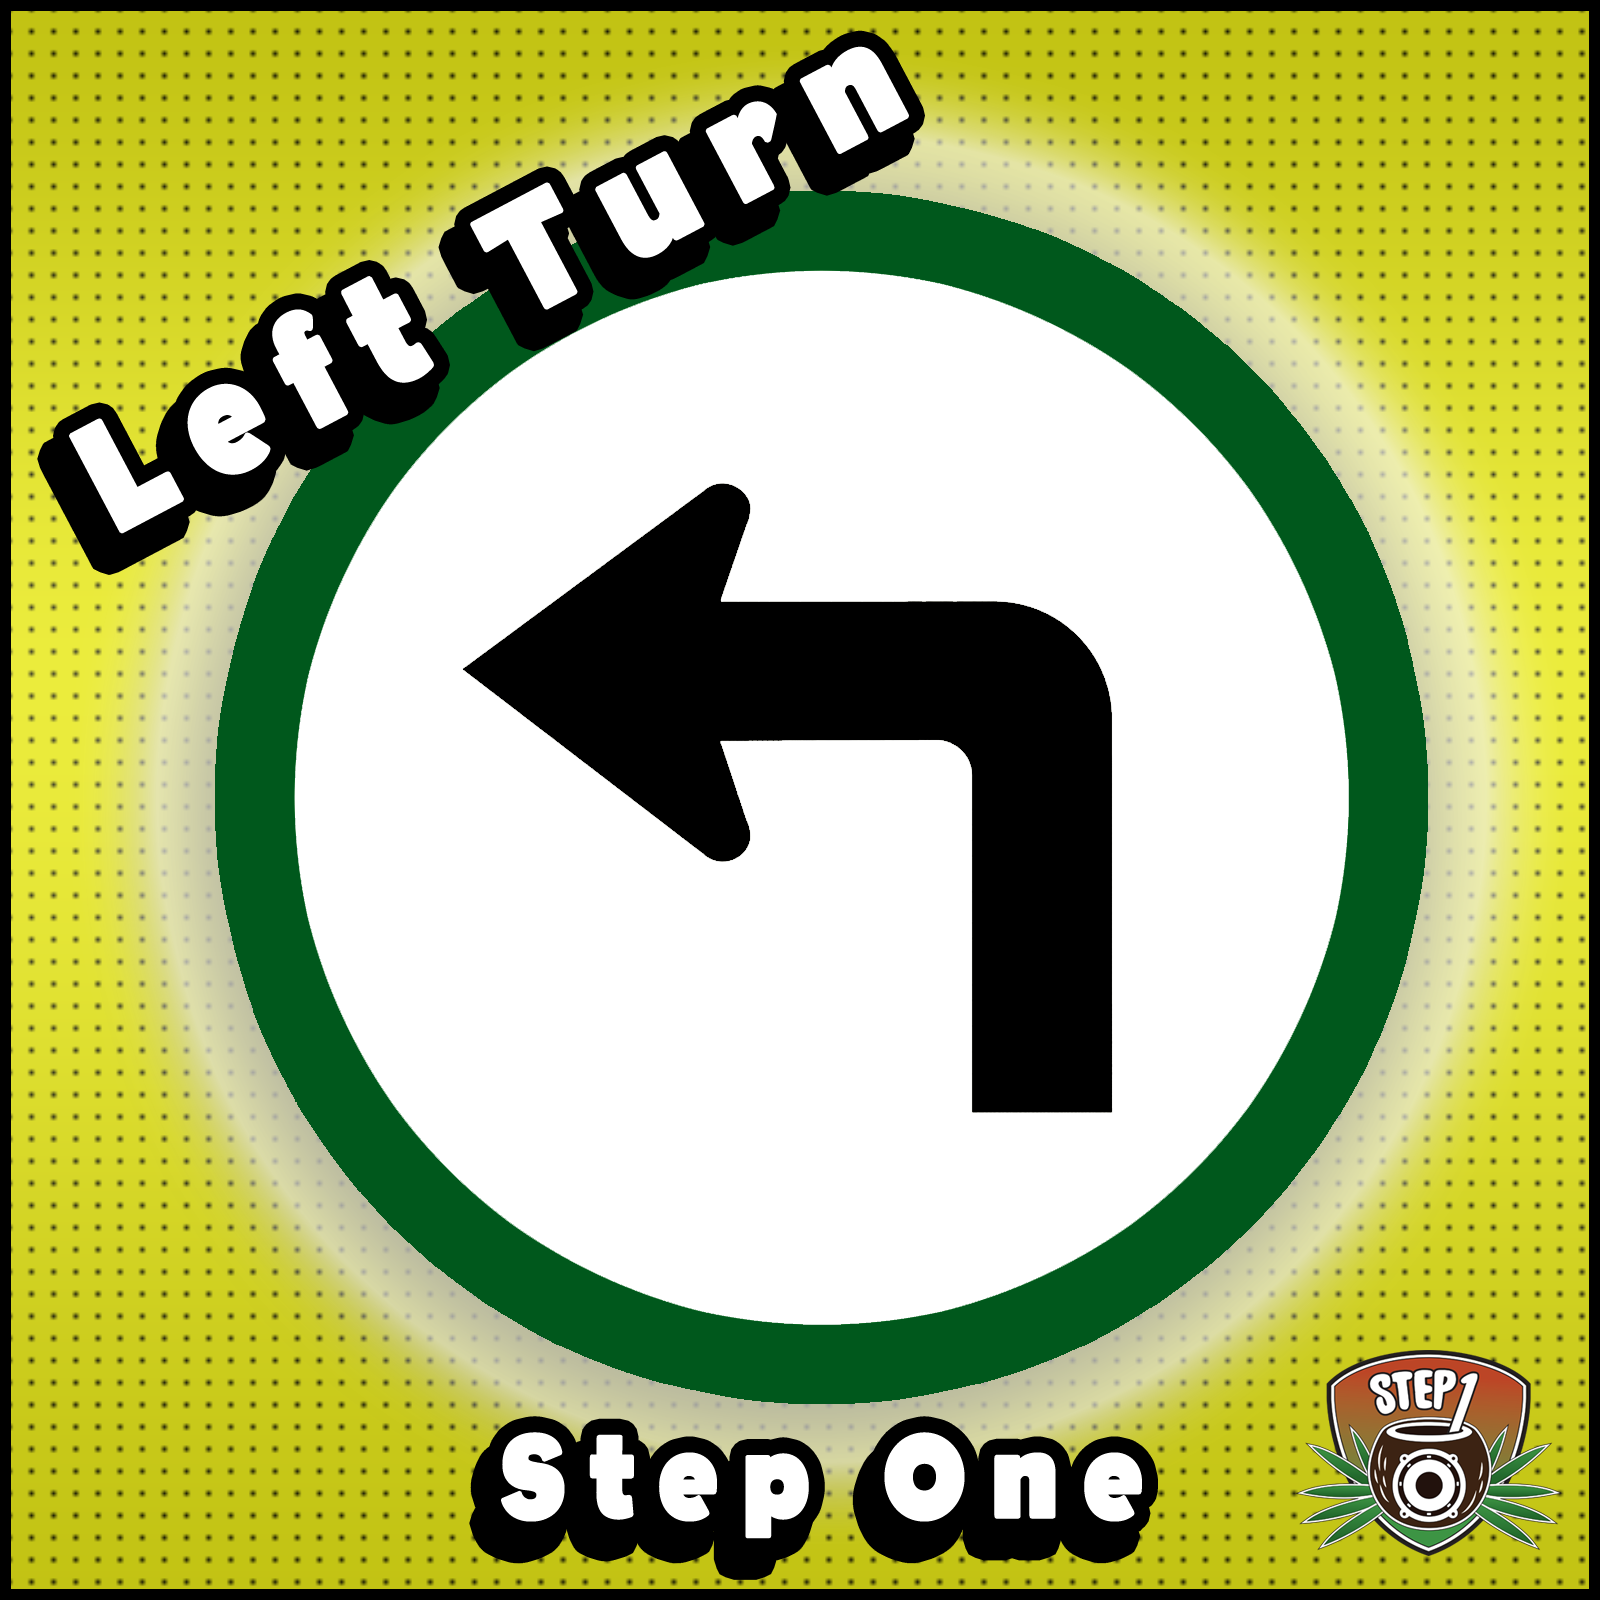 Step One - Left Turn